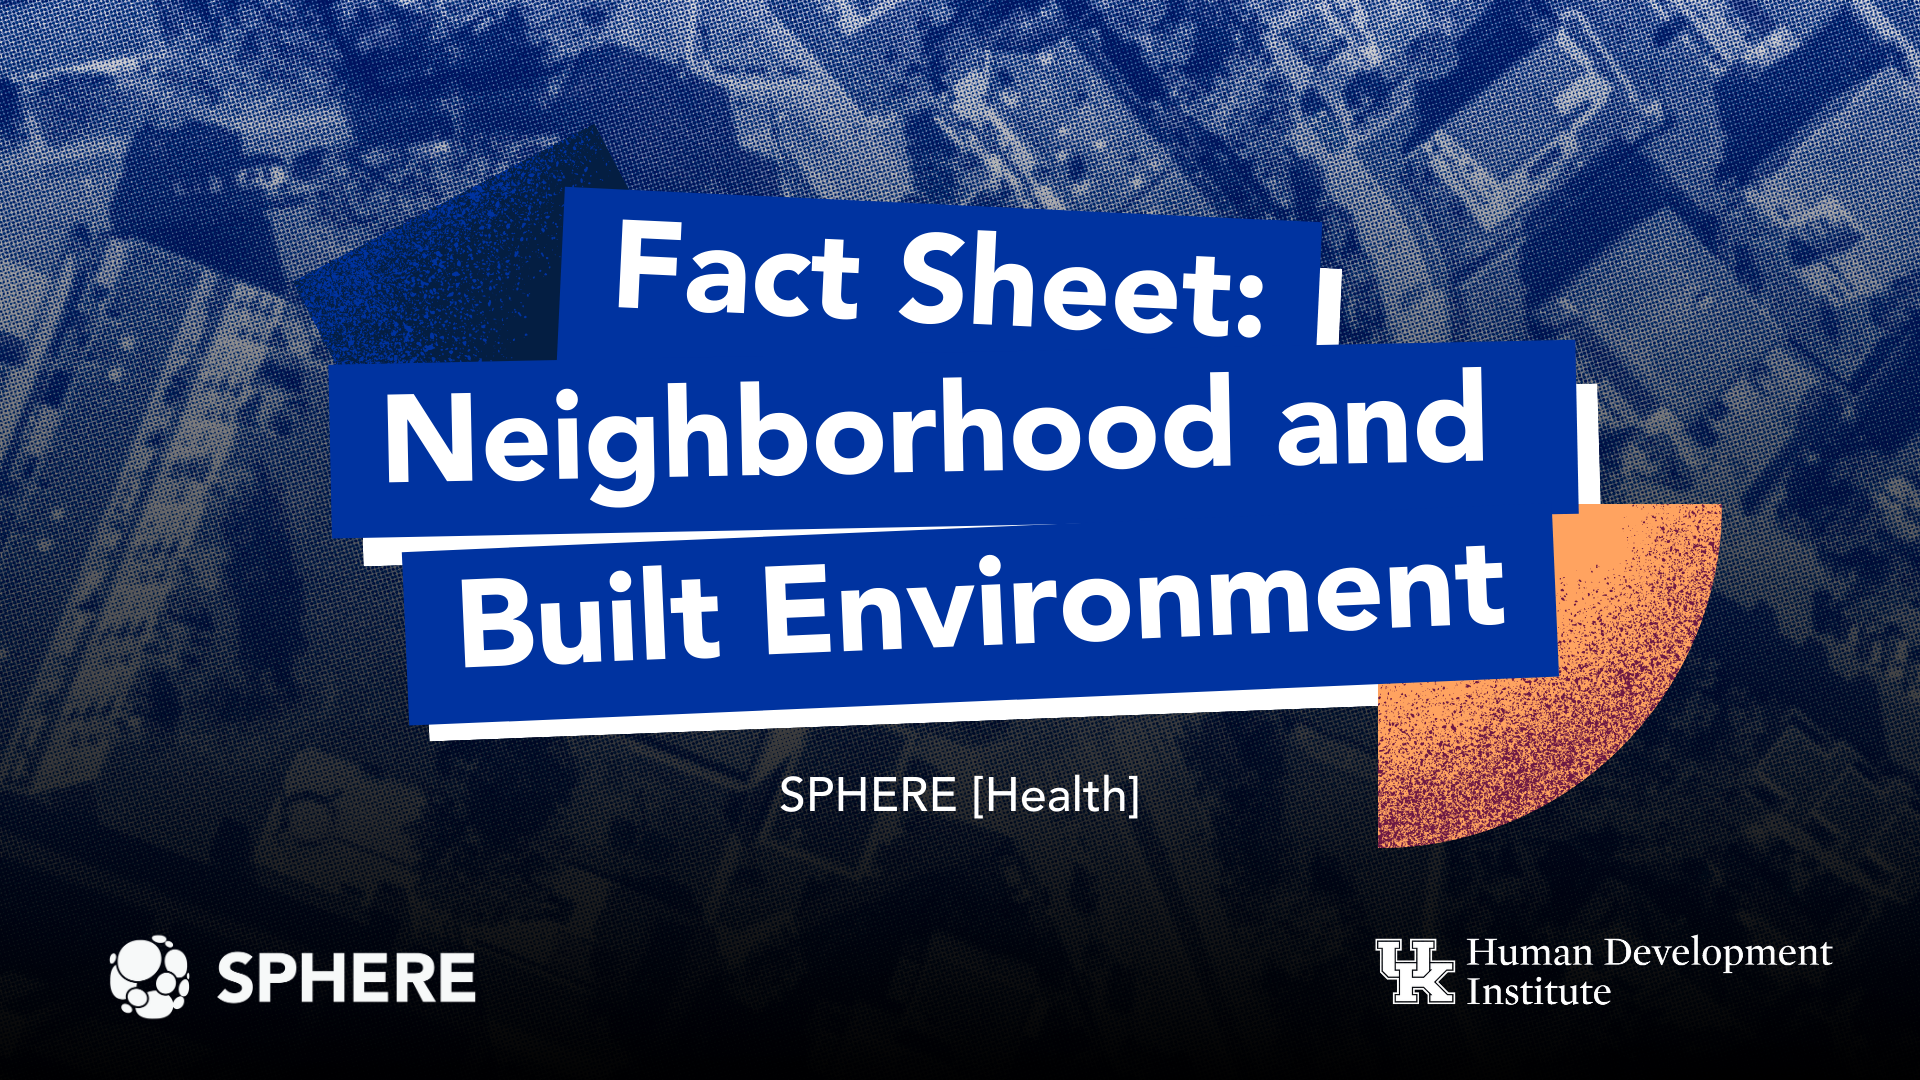 Sphere Fact Sheet: Neighborhood and Built Environment